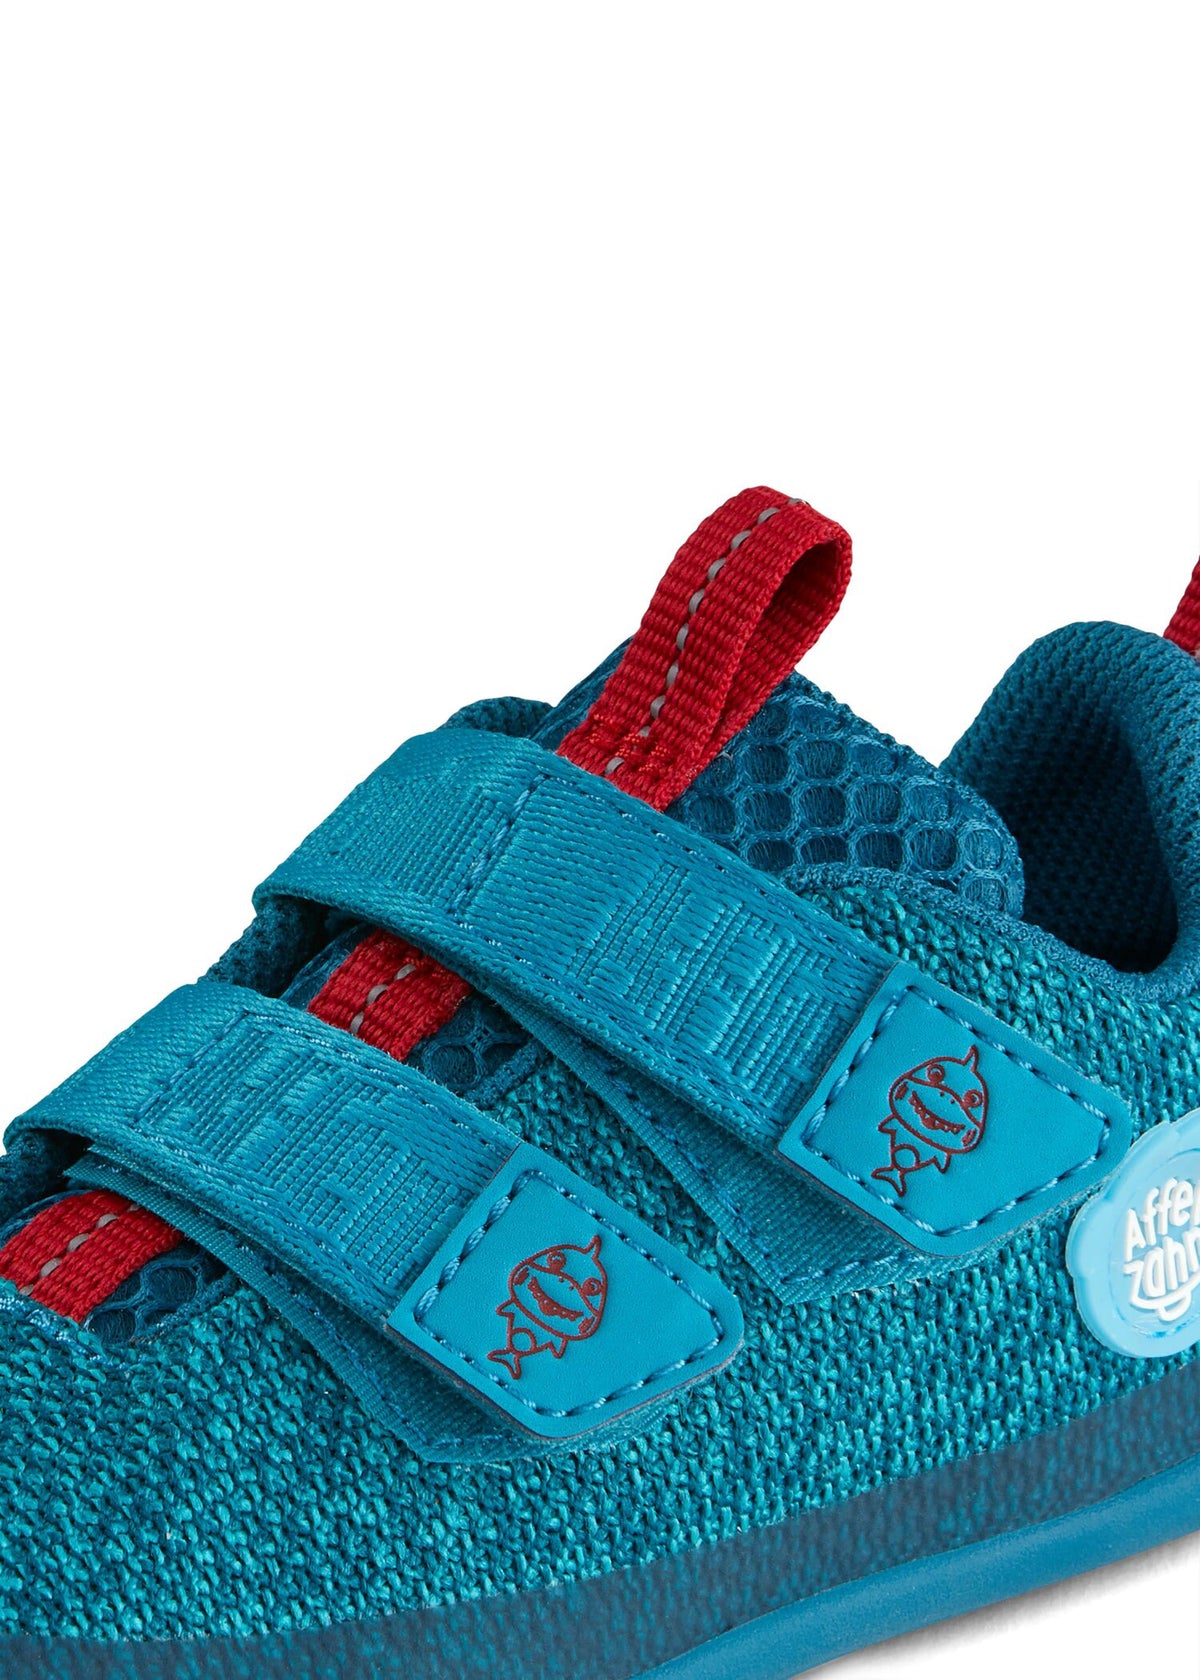 Children's Shark barefoot sneakers - Sneaker Knit Happy, blue, vegan